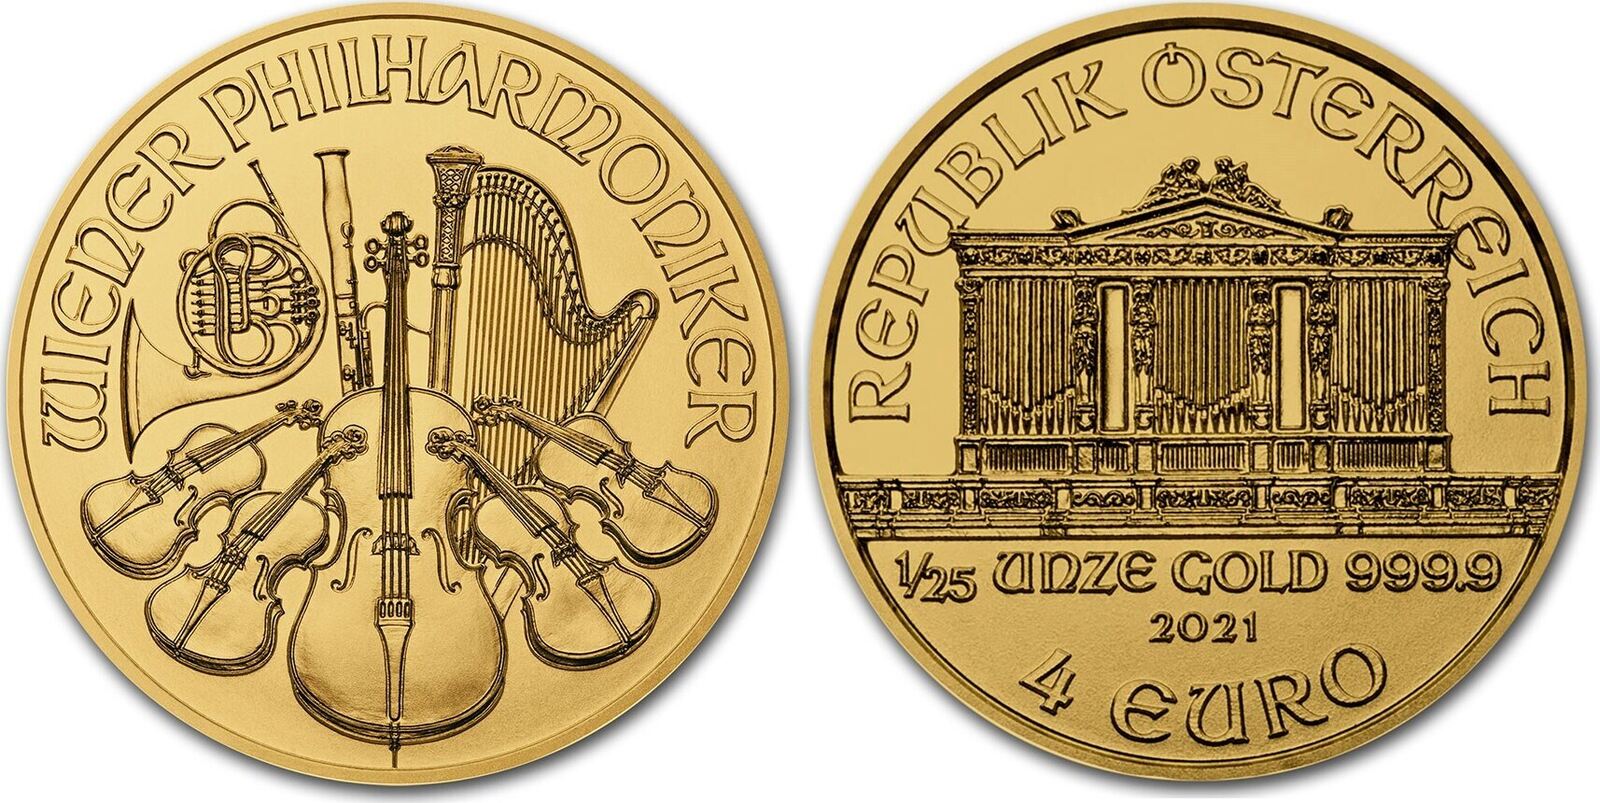 4 Gold Euro Vienna Philharmonic